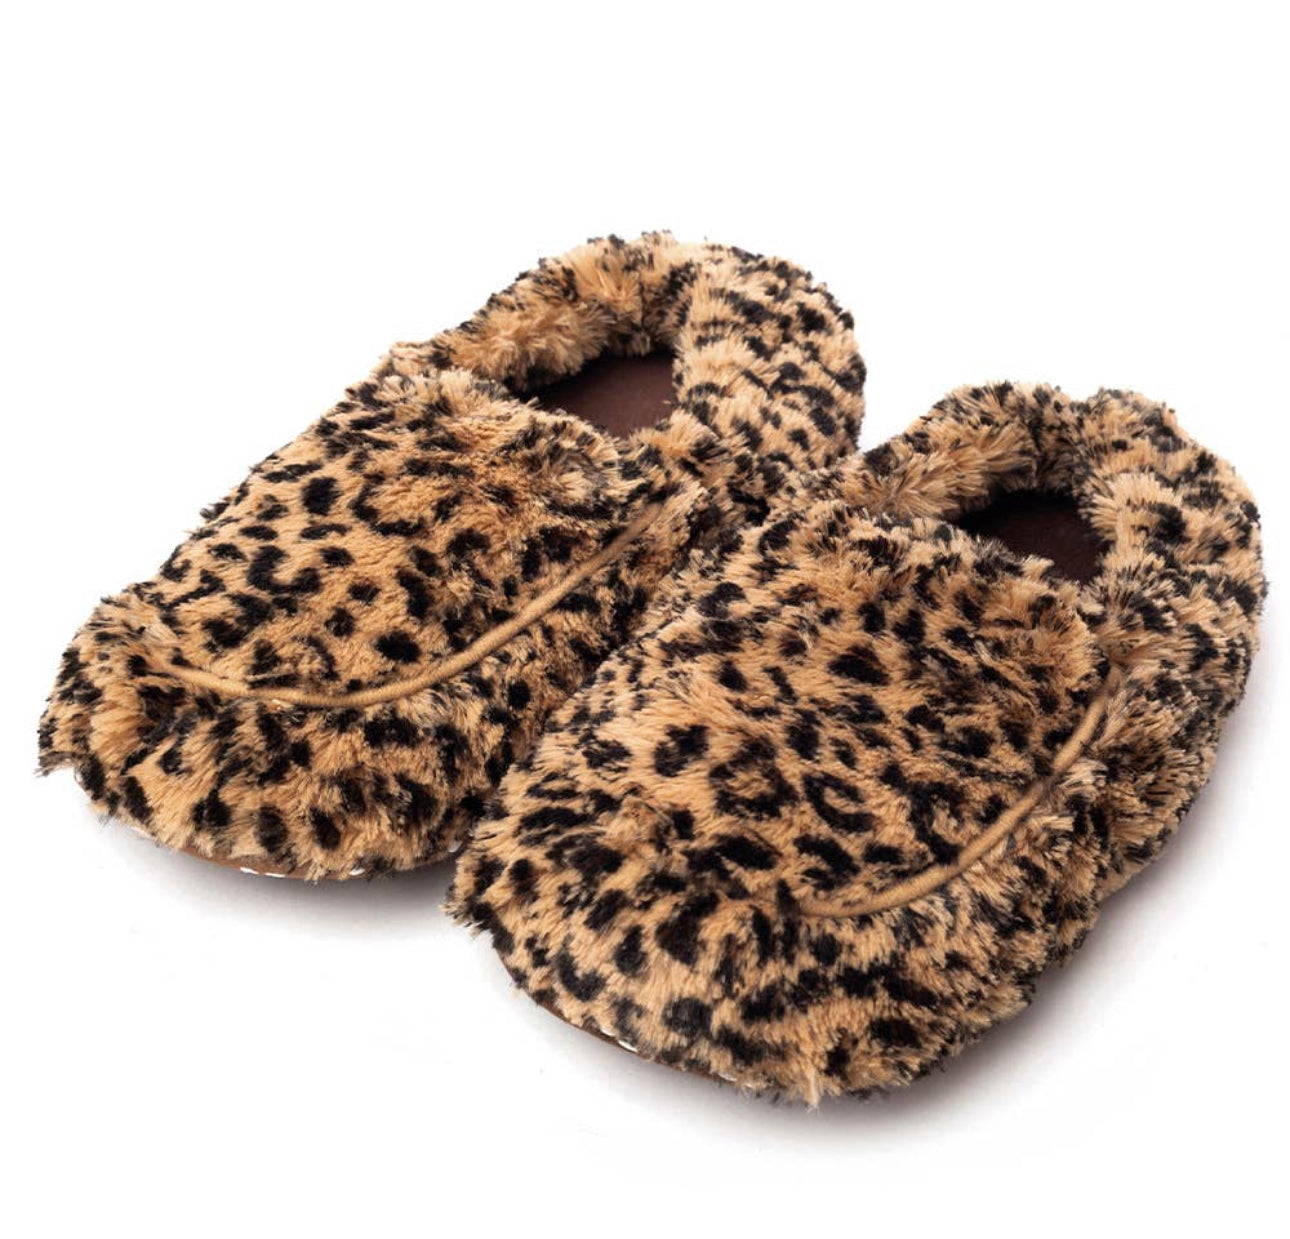 Warmies Heated Slippers, Leopard